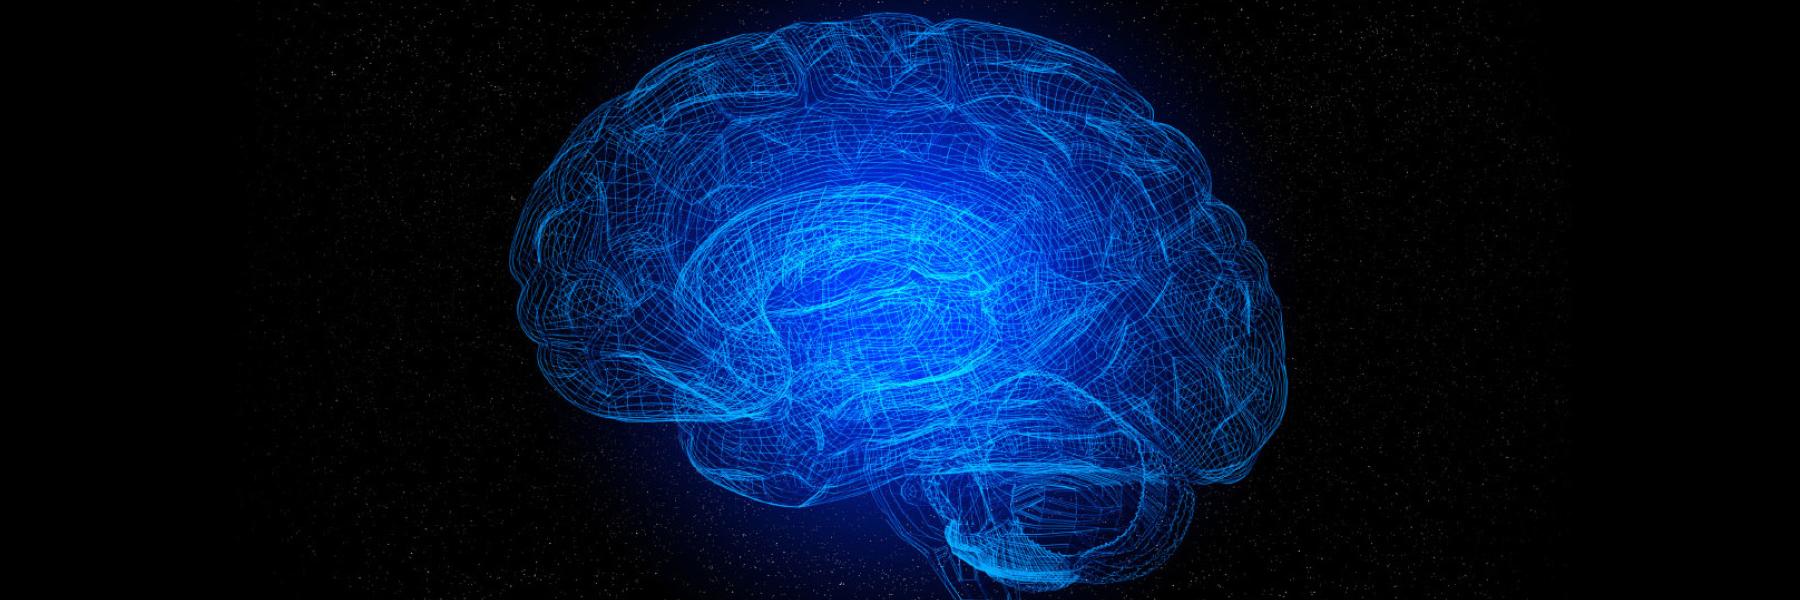 Visual image of a human brain